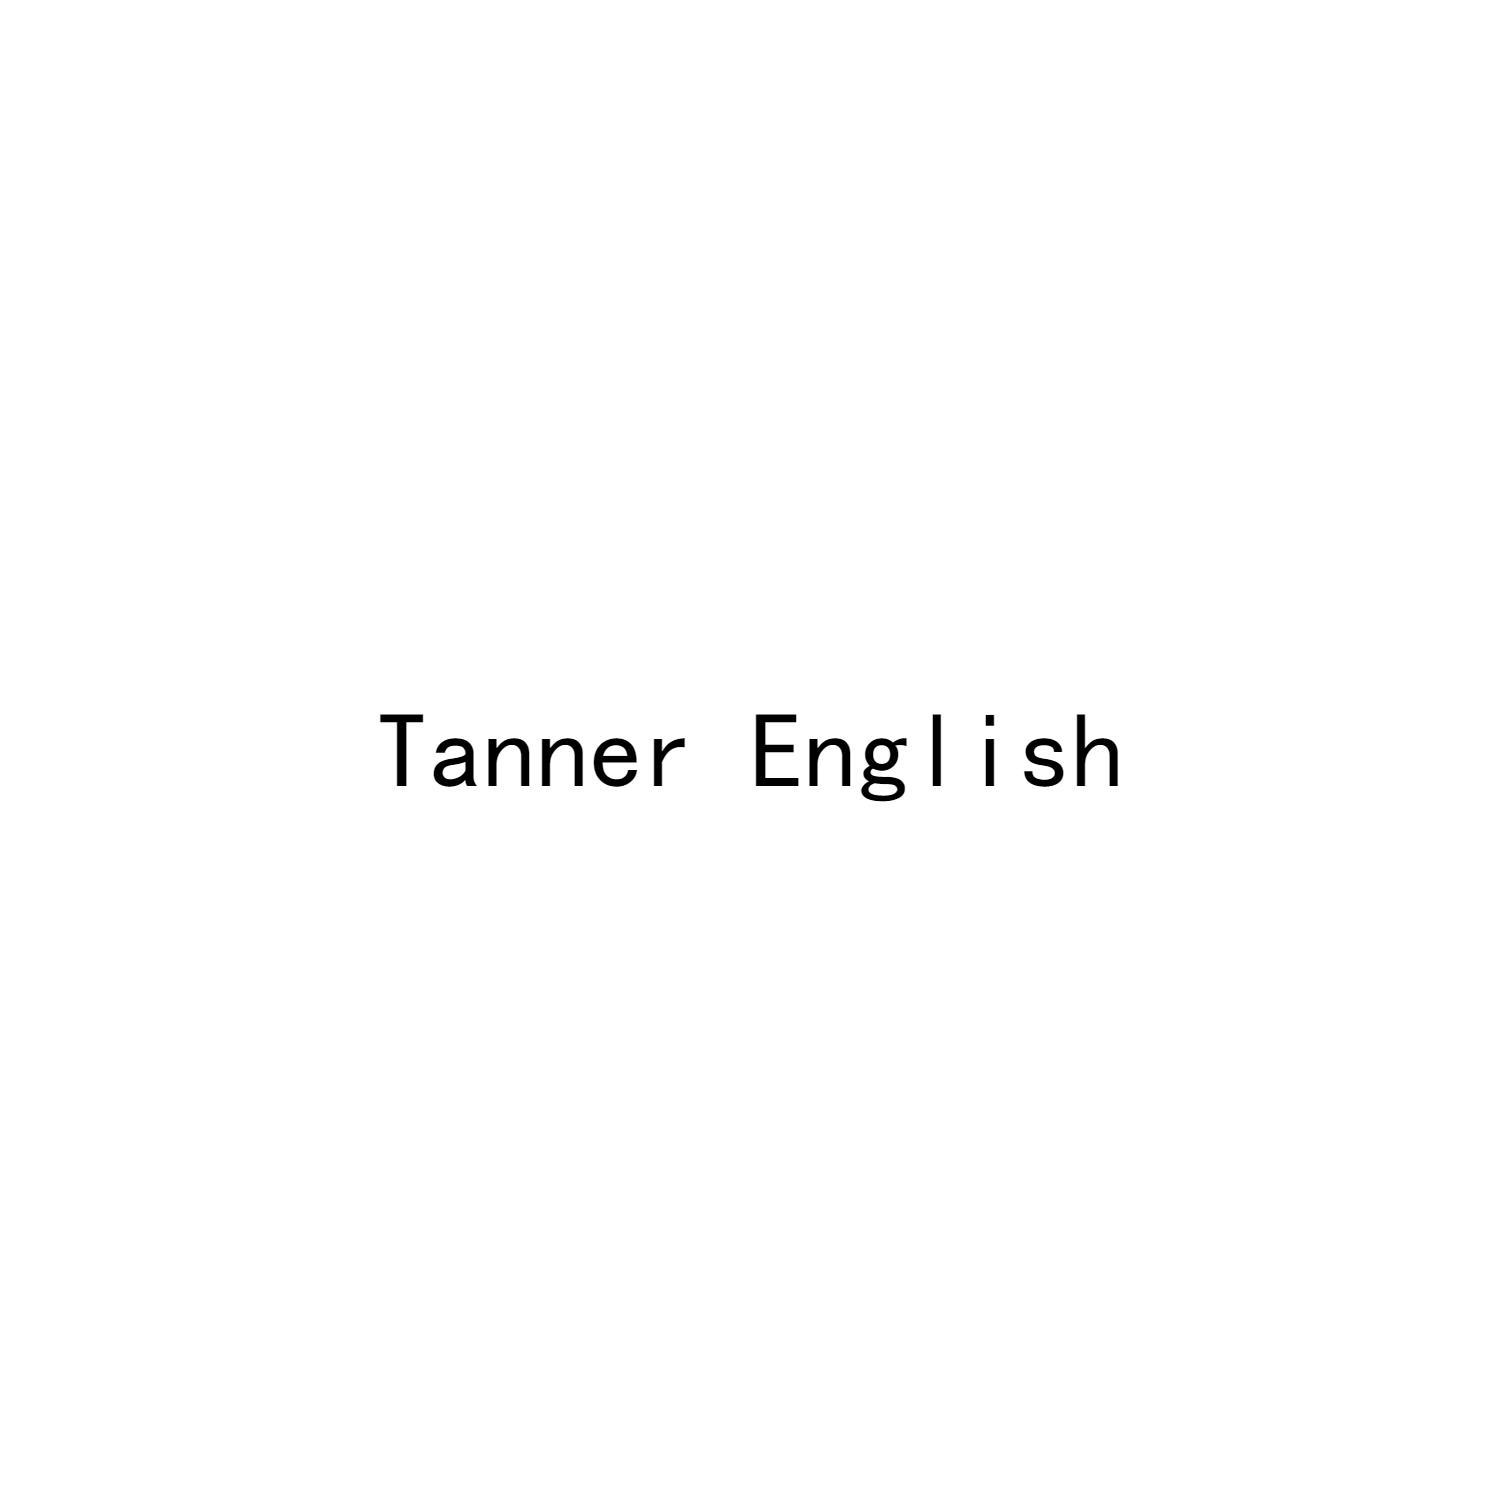 TANNER ENGLISH